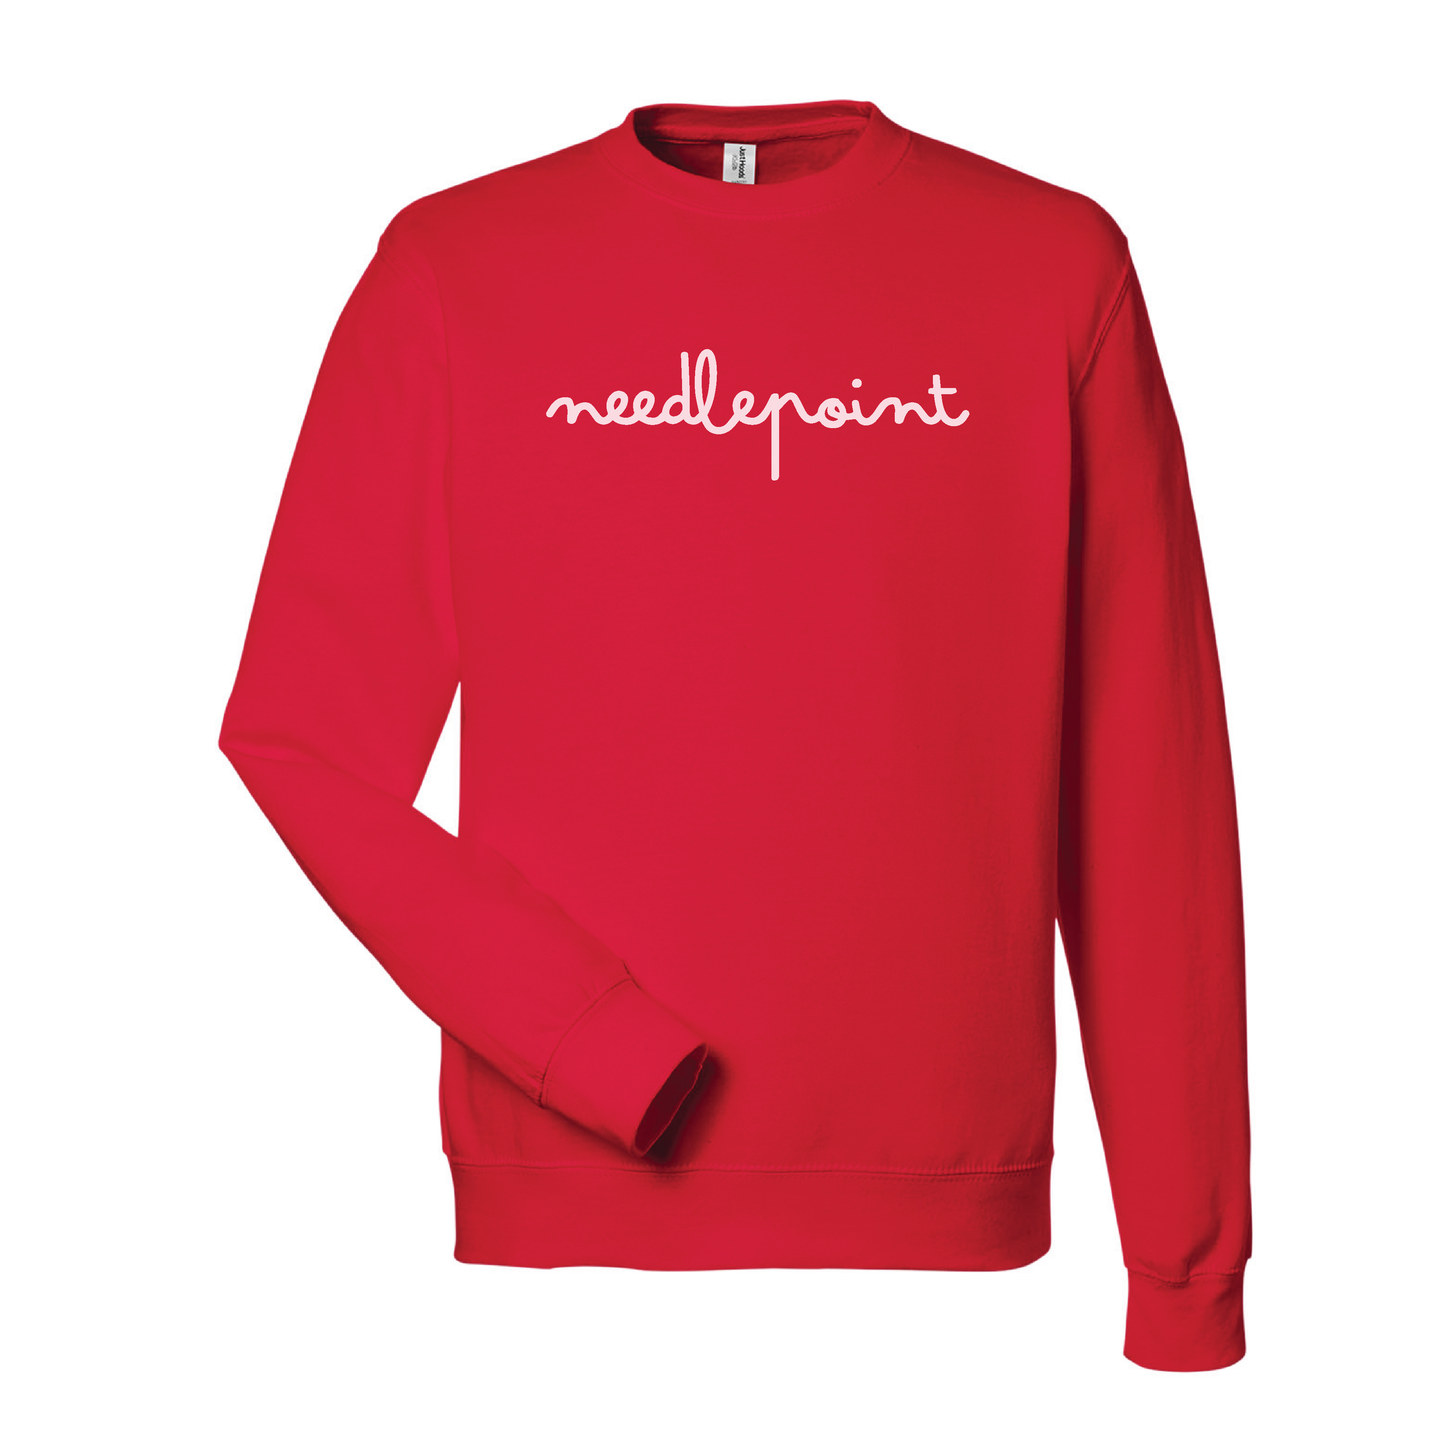 needlepoint sweatshirt - really red